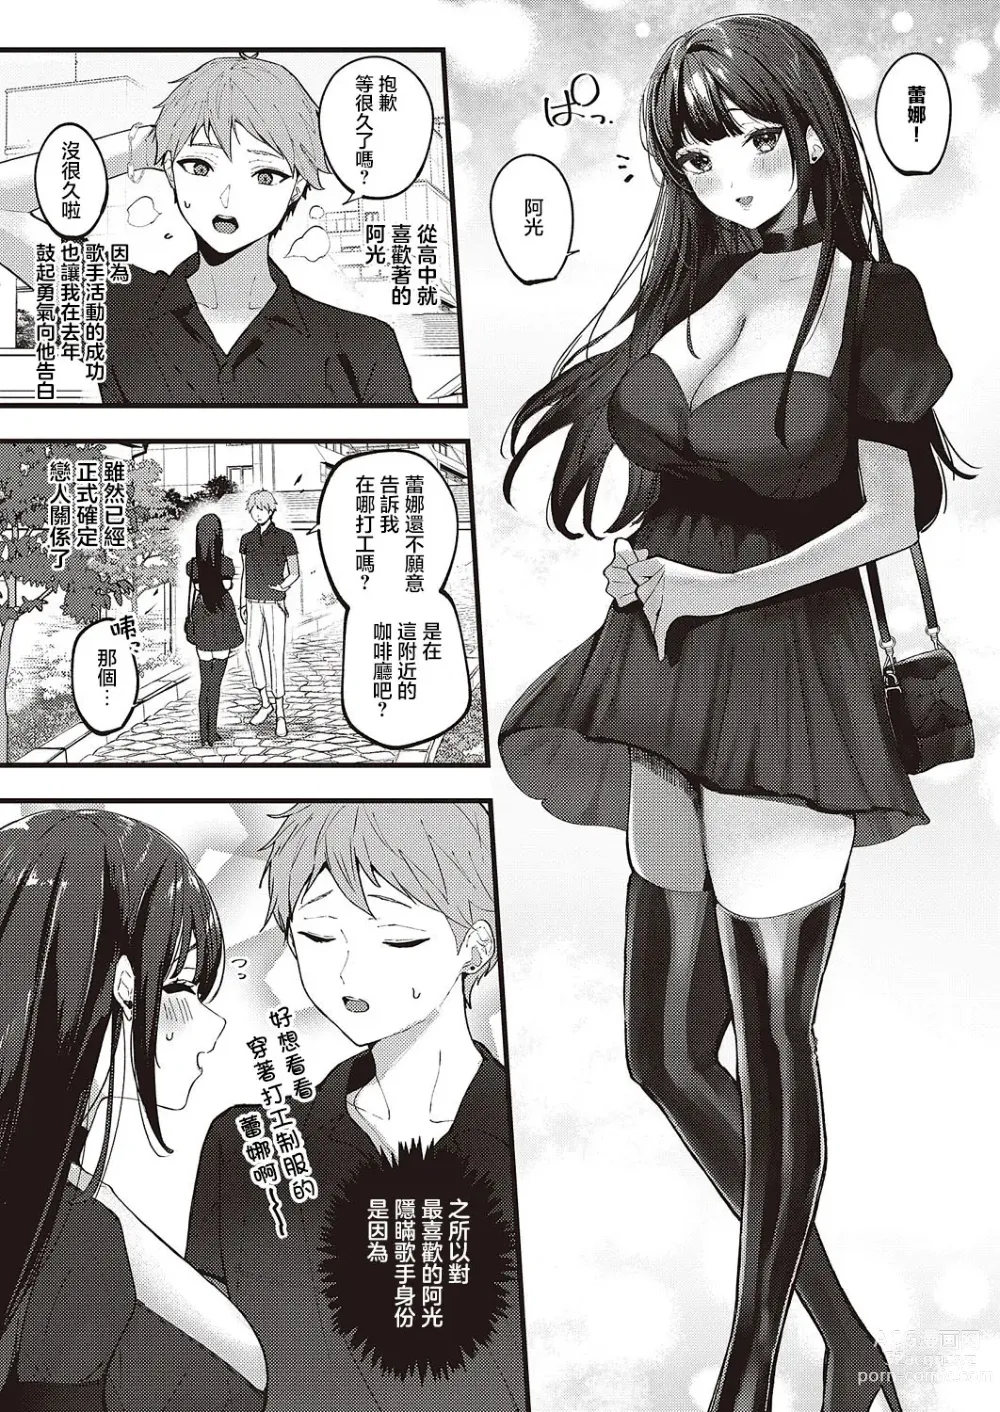 Page 3 of manga Cool Voice wa Kimi no Tame